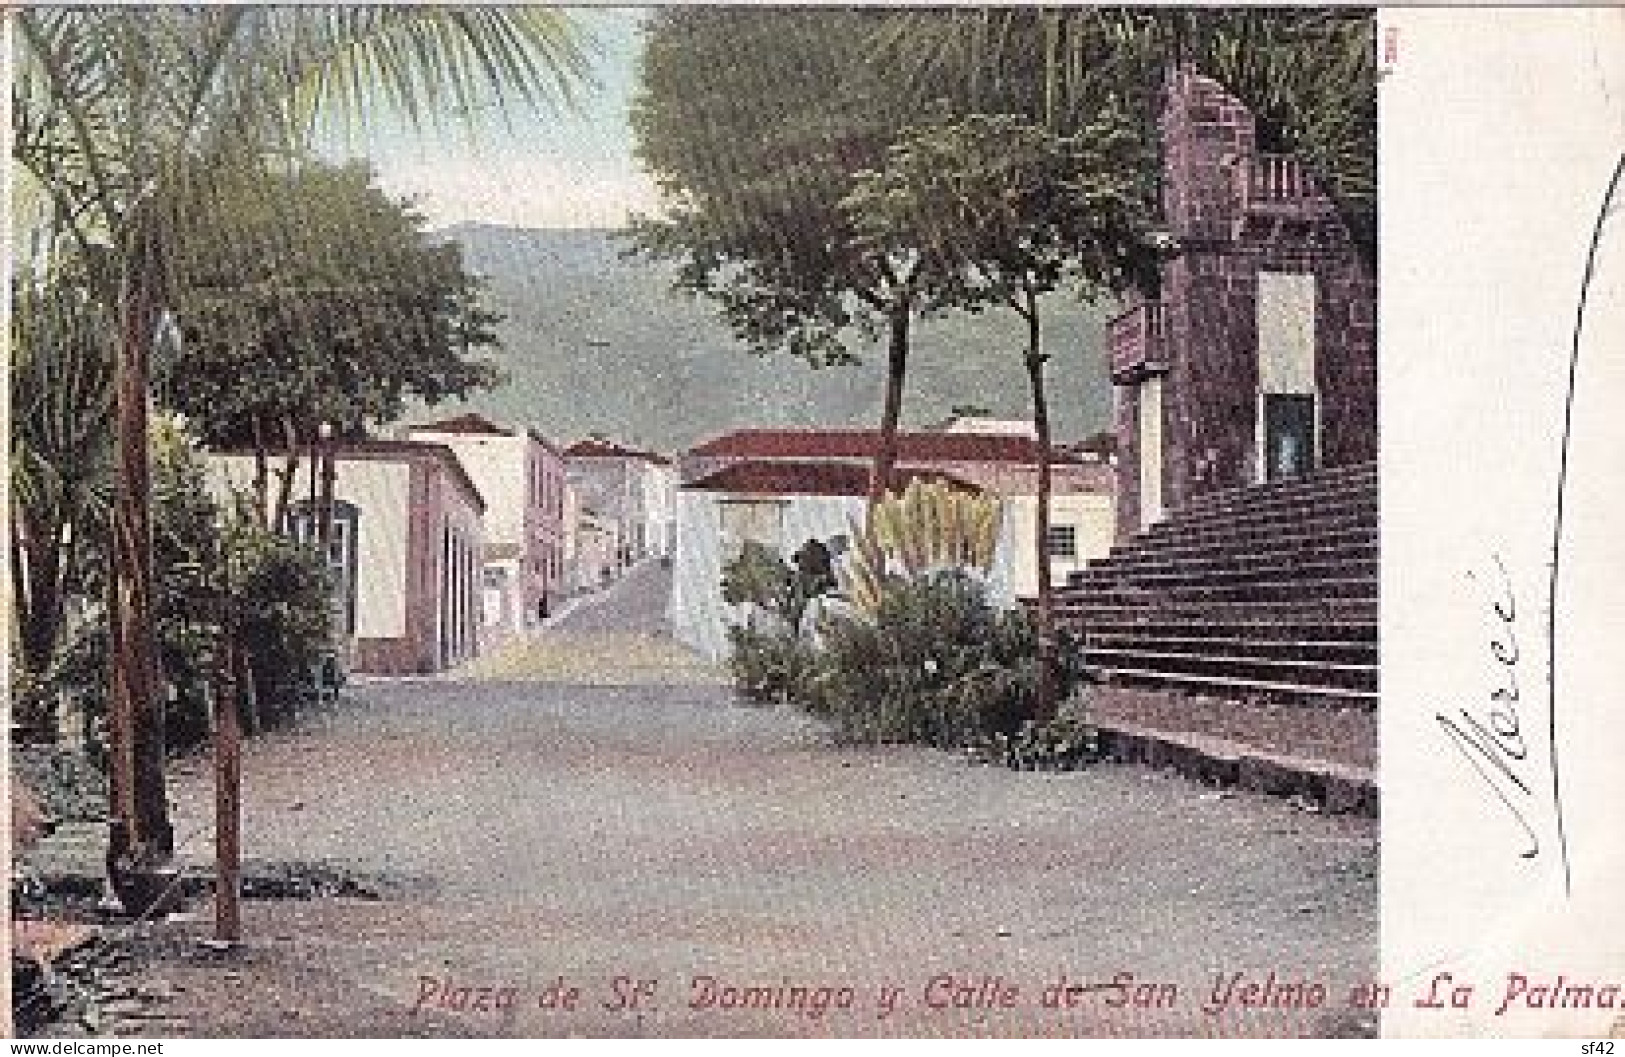 PLAZA DE STO DOMINGO Y CALLE DE SAN YELMO EN LA PALMA - La Palma